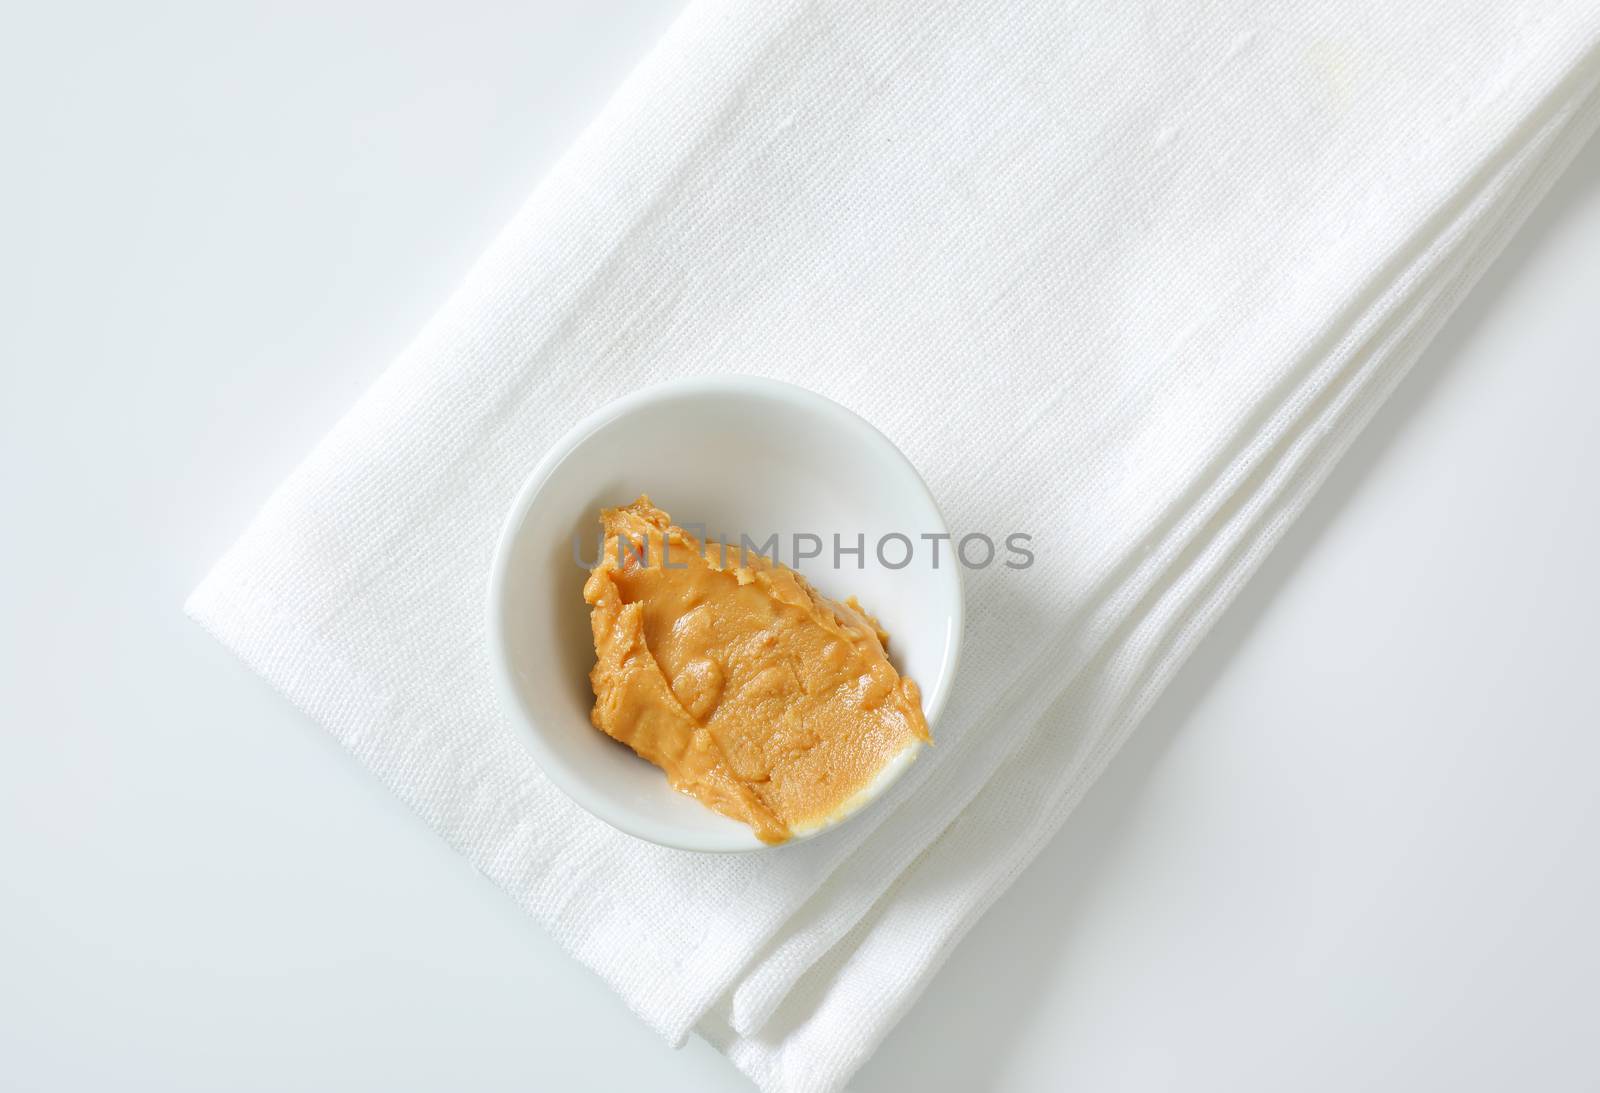 Crunchy peanut butter by Digifoodstock